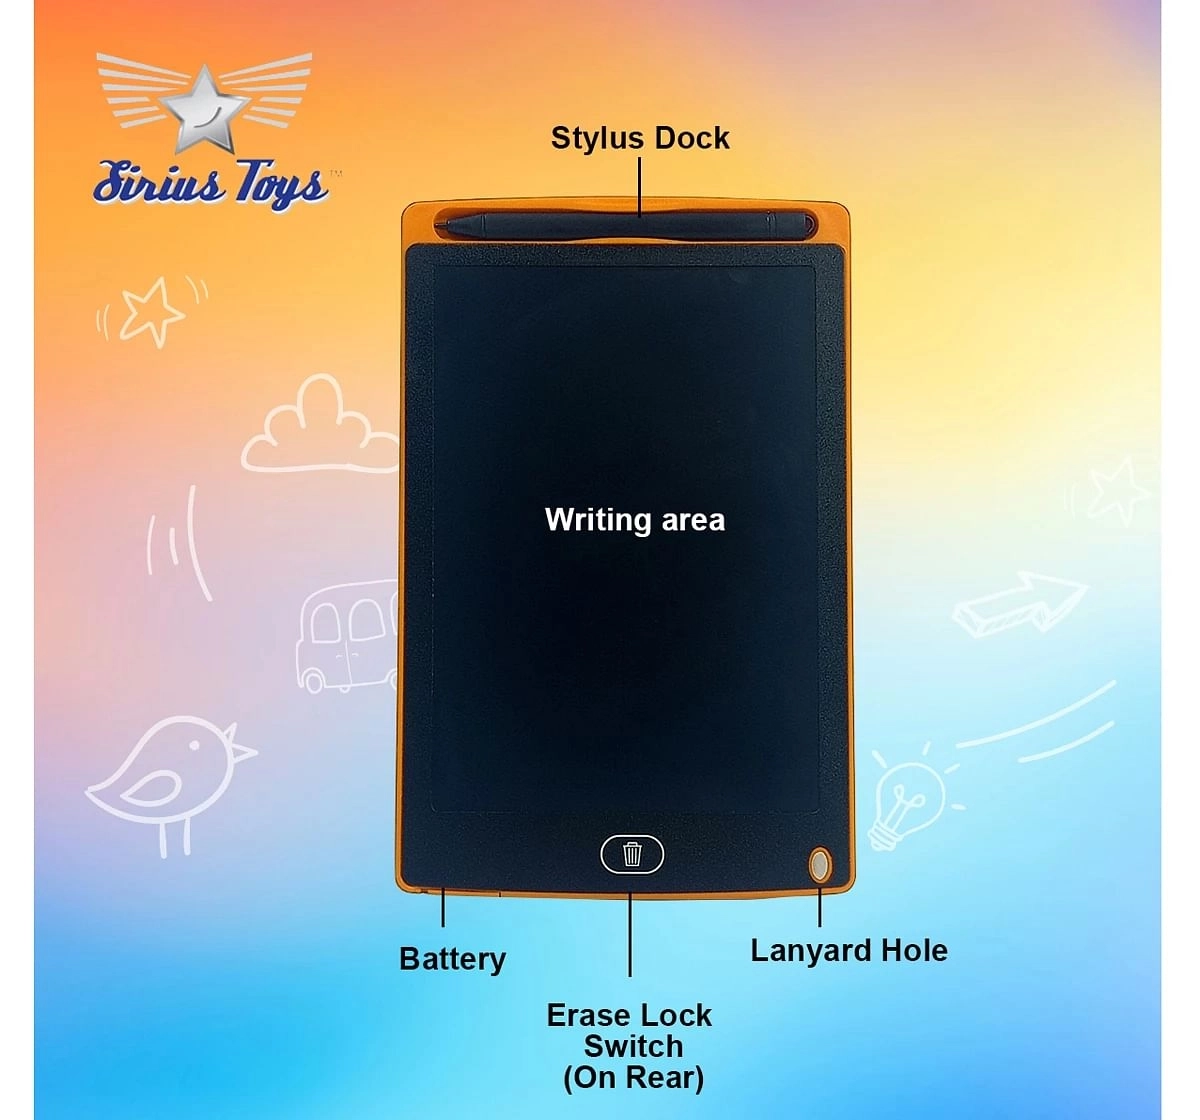 Sirius Toys LCD Tab 8.5cm Drawing Board for kids 4Y+, Orange